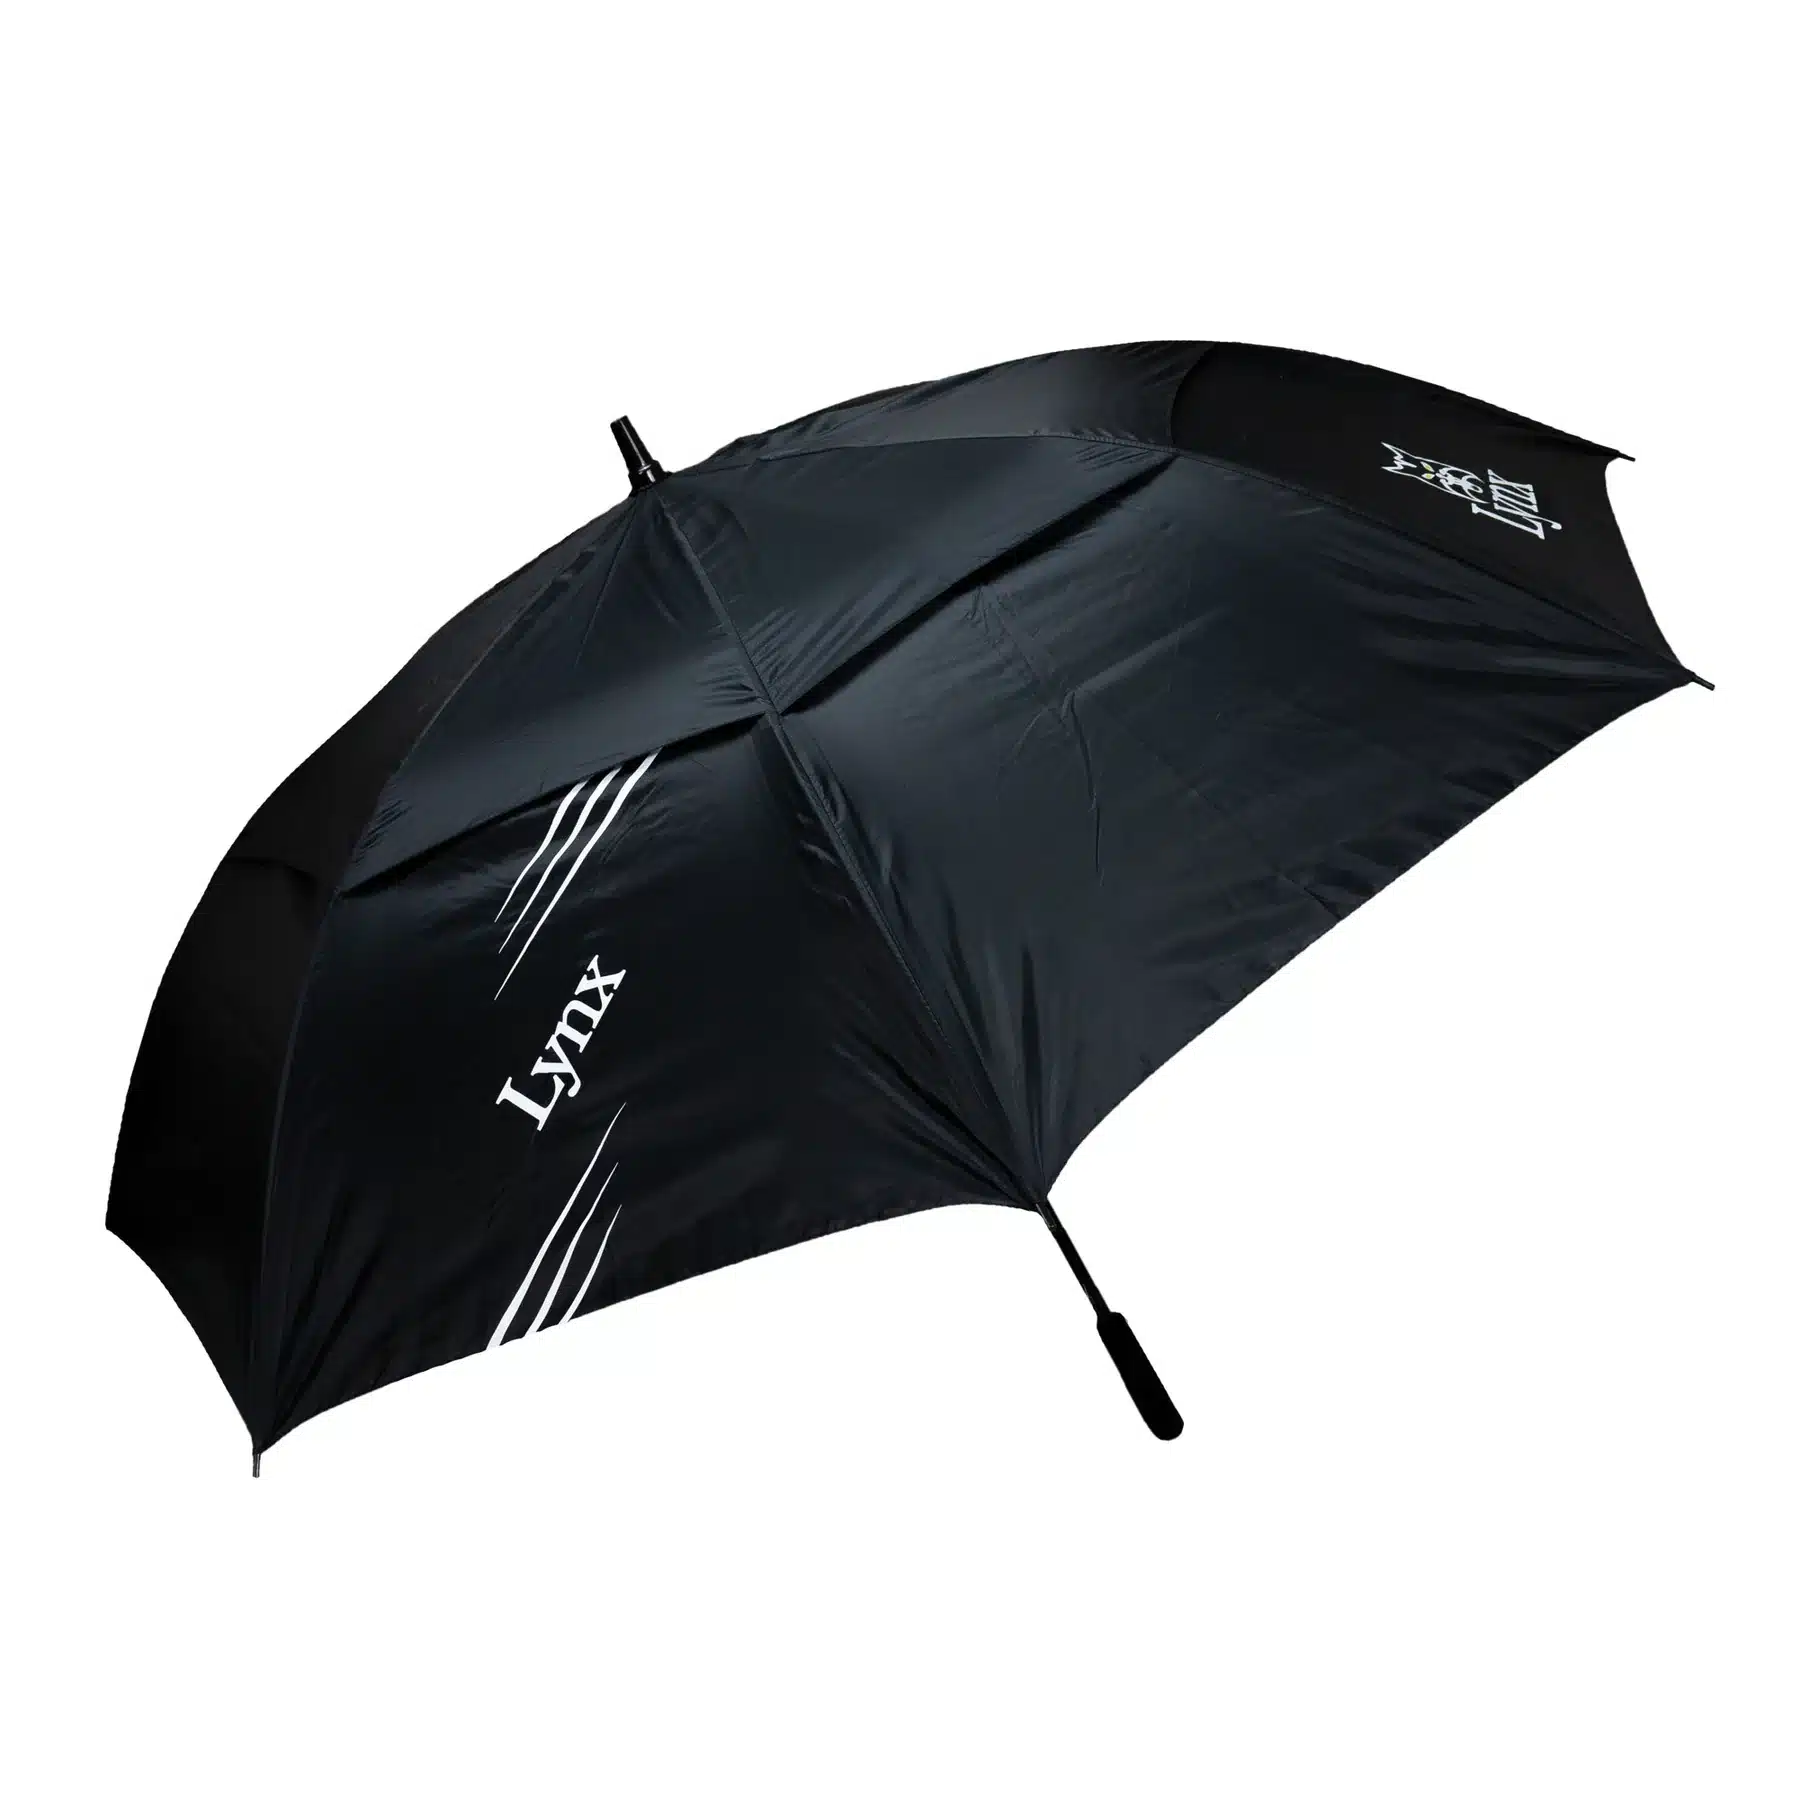 Lynx Double Canopy Umbrella Black